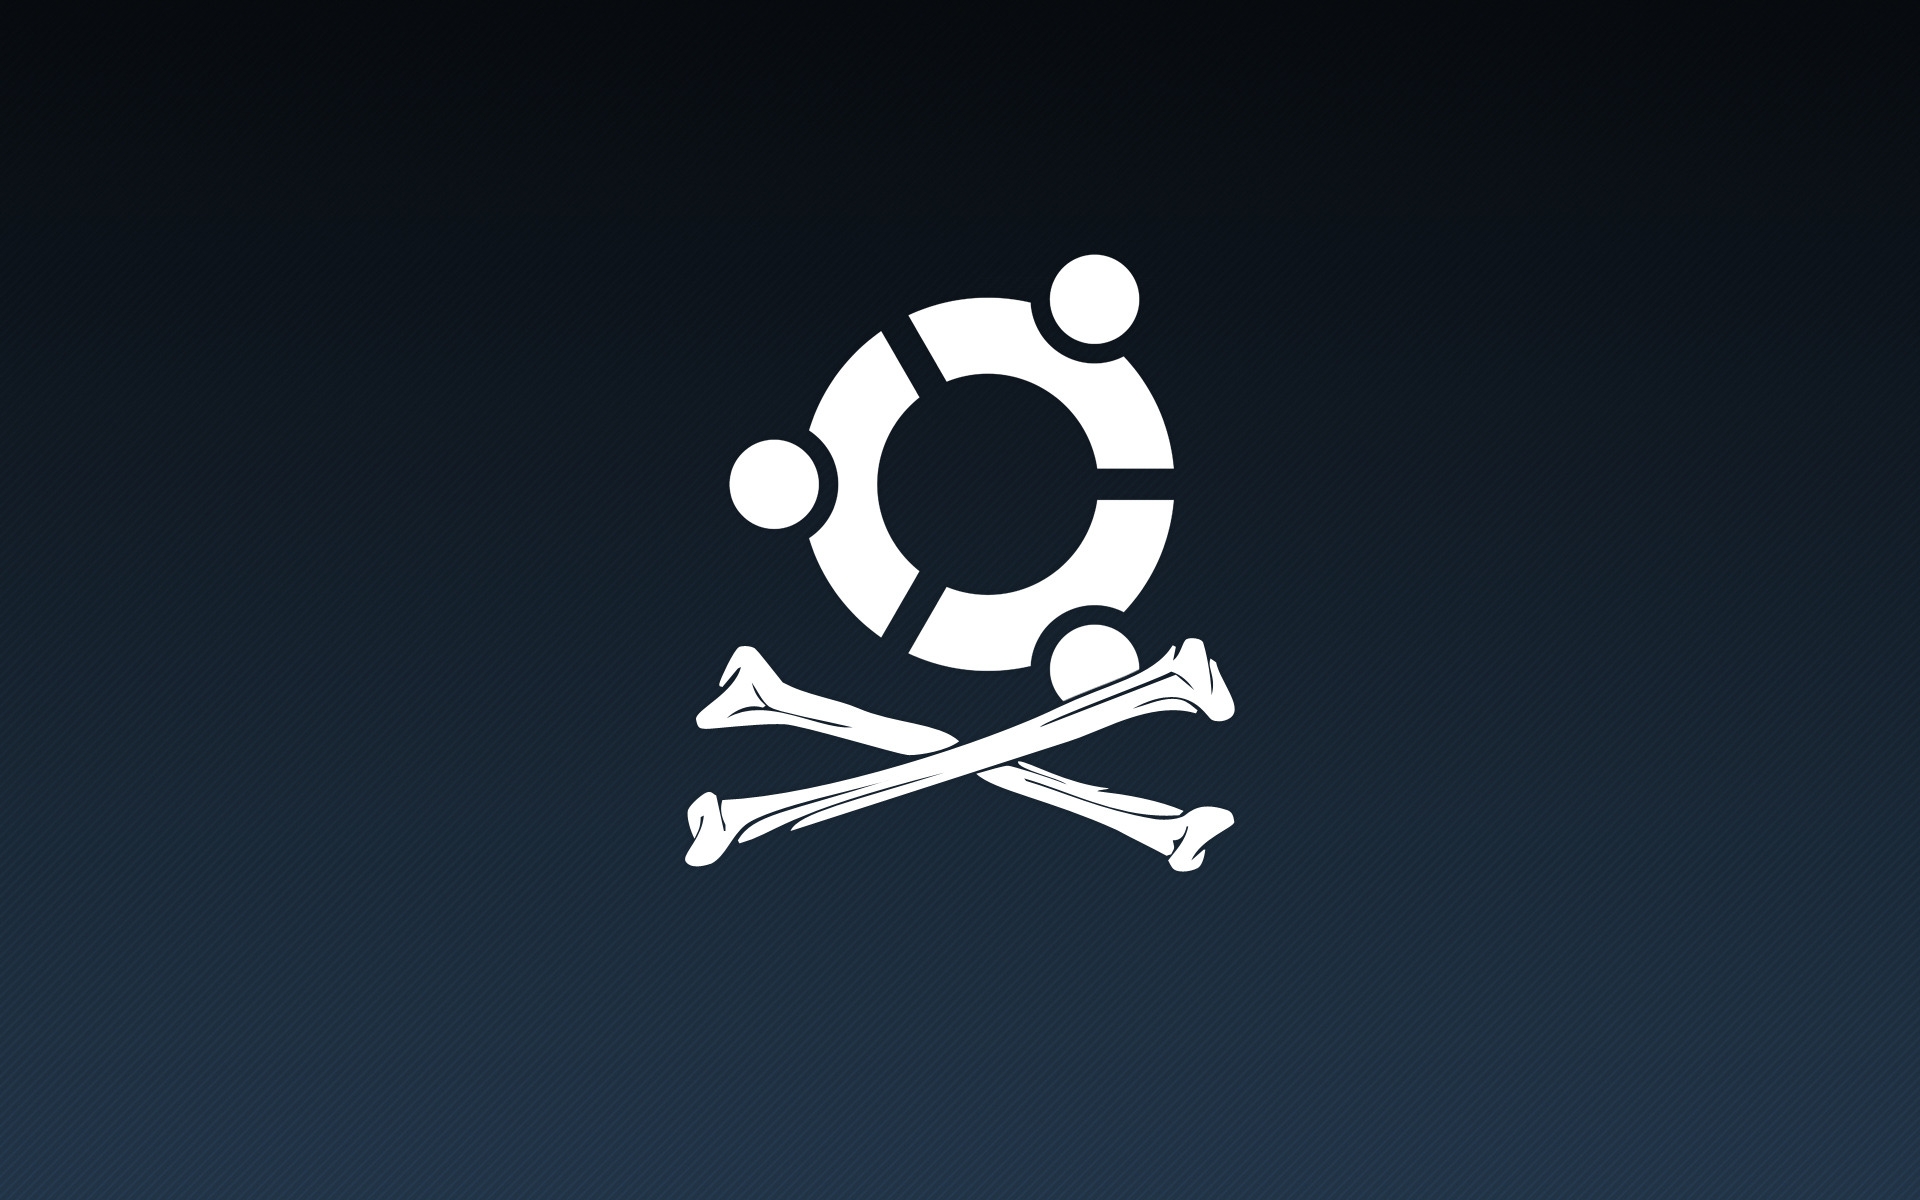 Pirate Ubuntu for 1920 x 1200 widescreen resolution